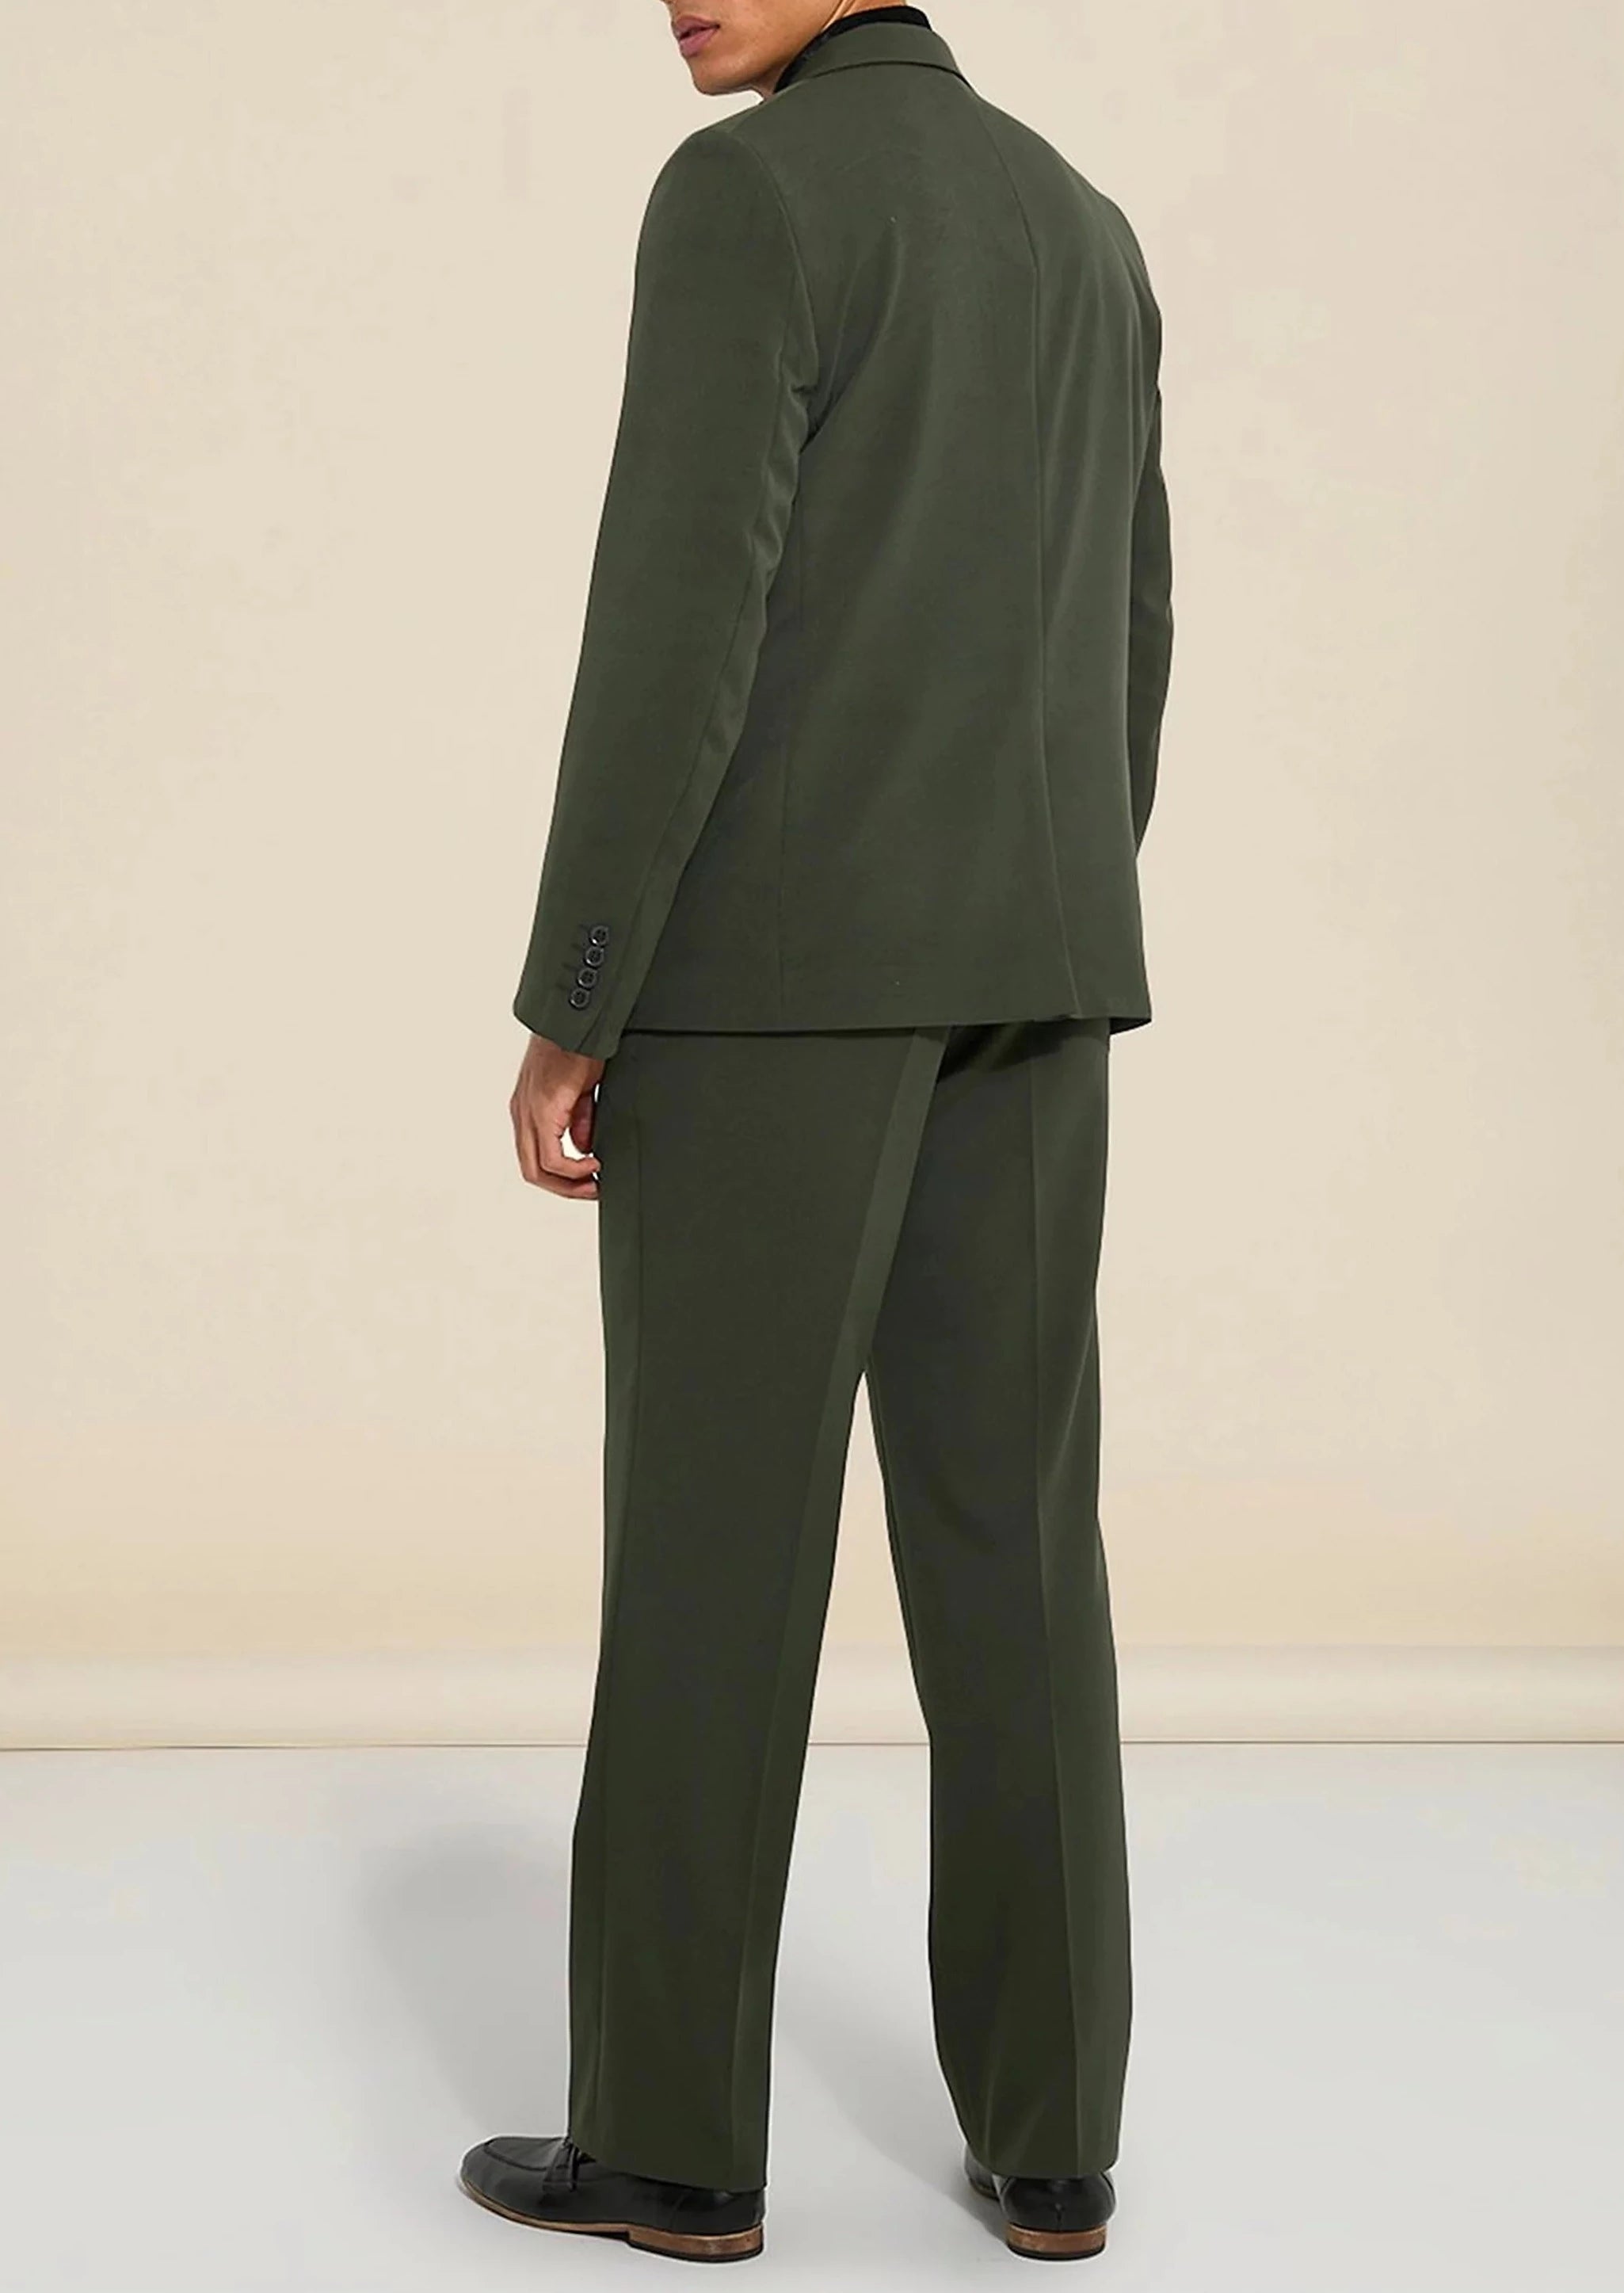 ASOS DESIGN Super Skinny Tuxedo Suit Trousers In Jasper Green, $26 | Asos |  Lookastic